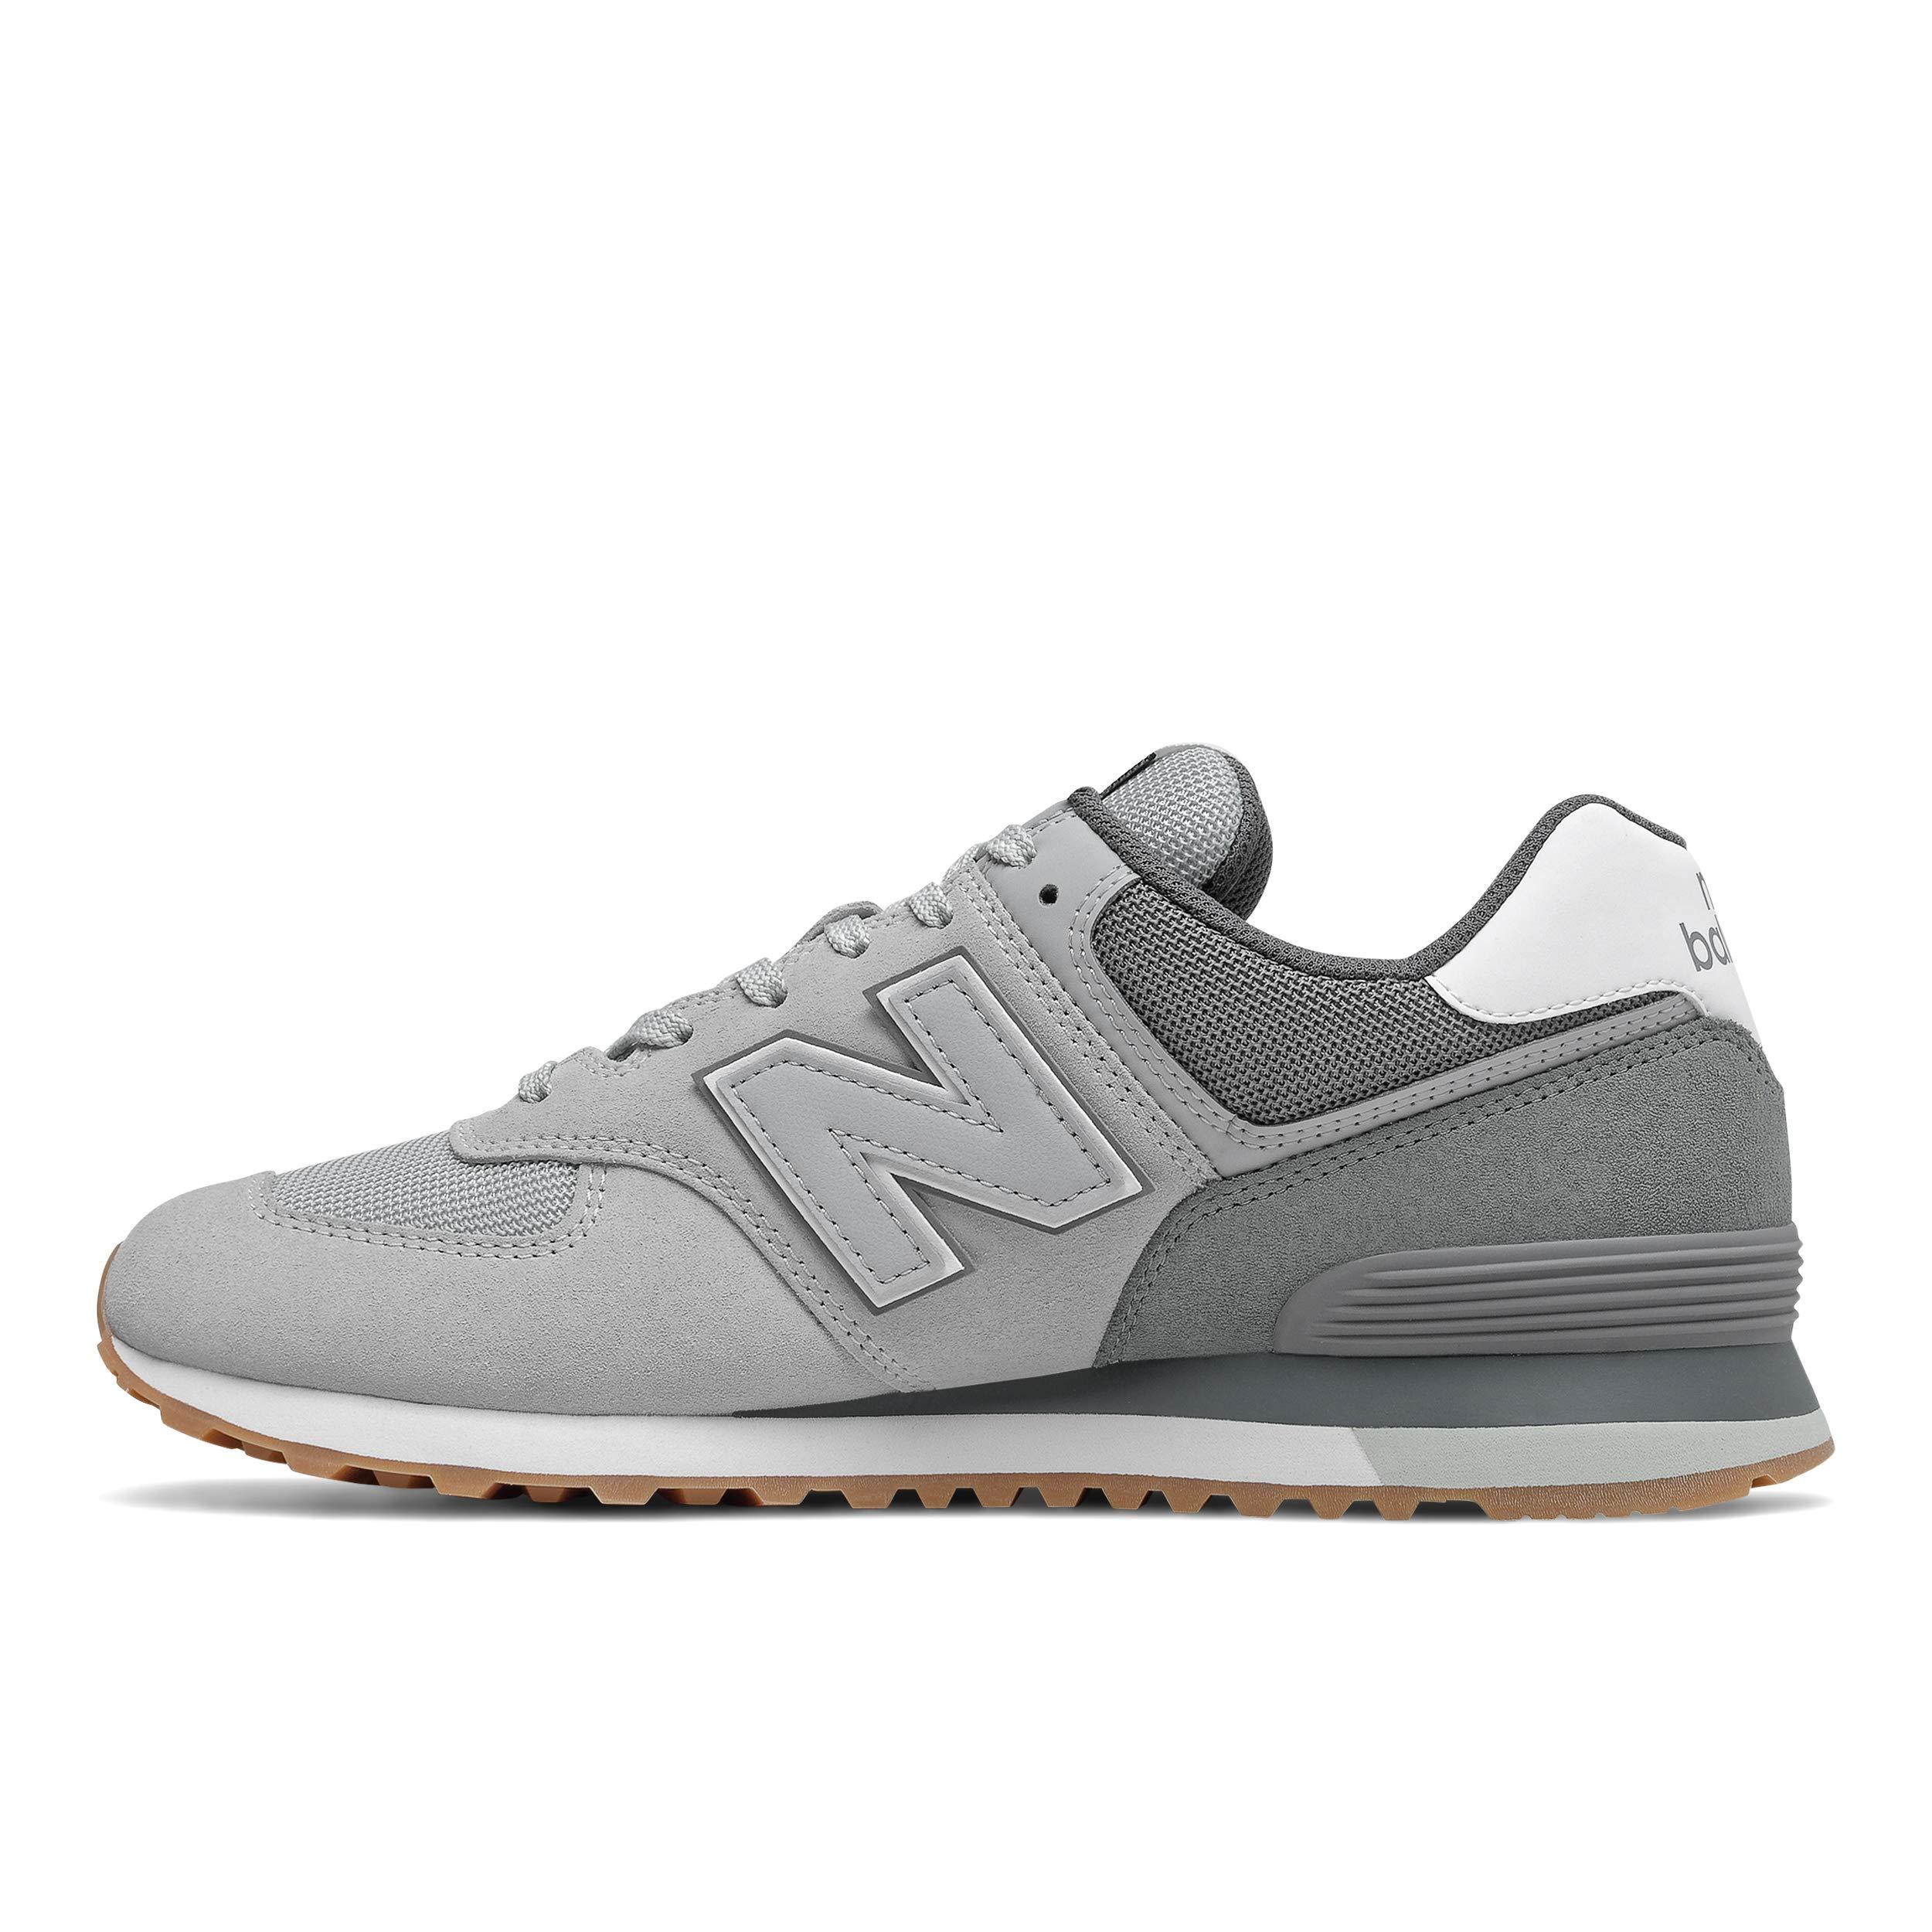 New Balance Suede 574 V2 Sport Sneaker in Gray for Men - Lyst